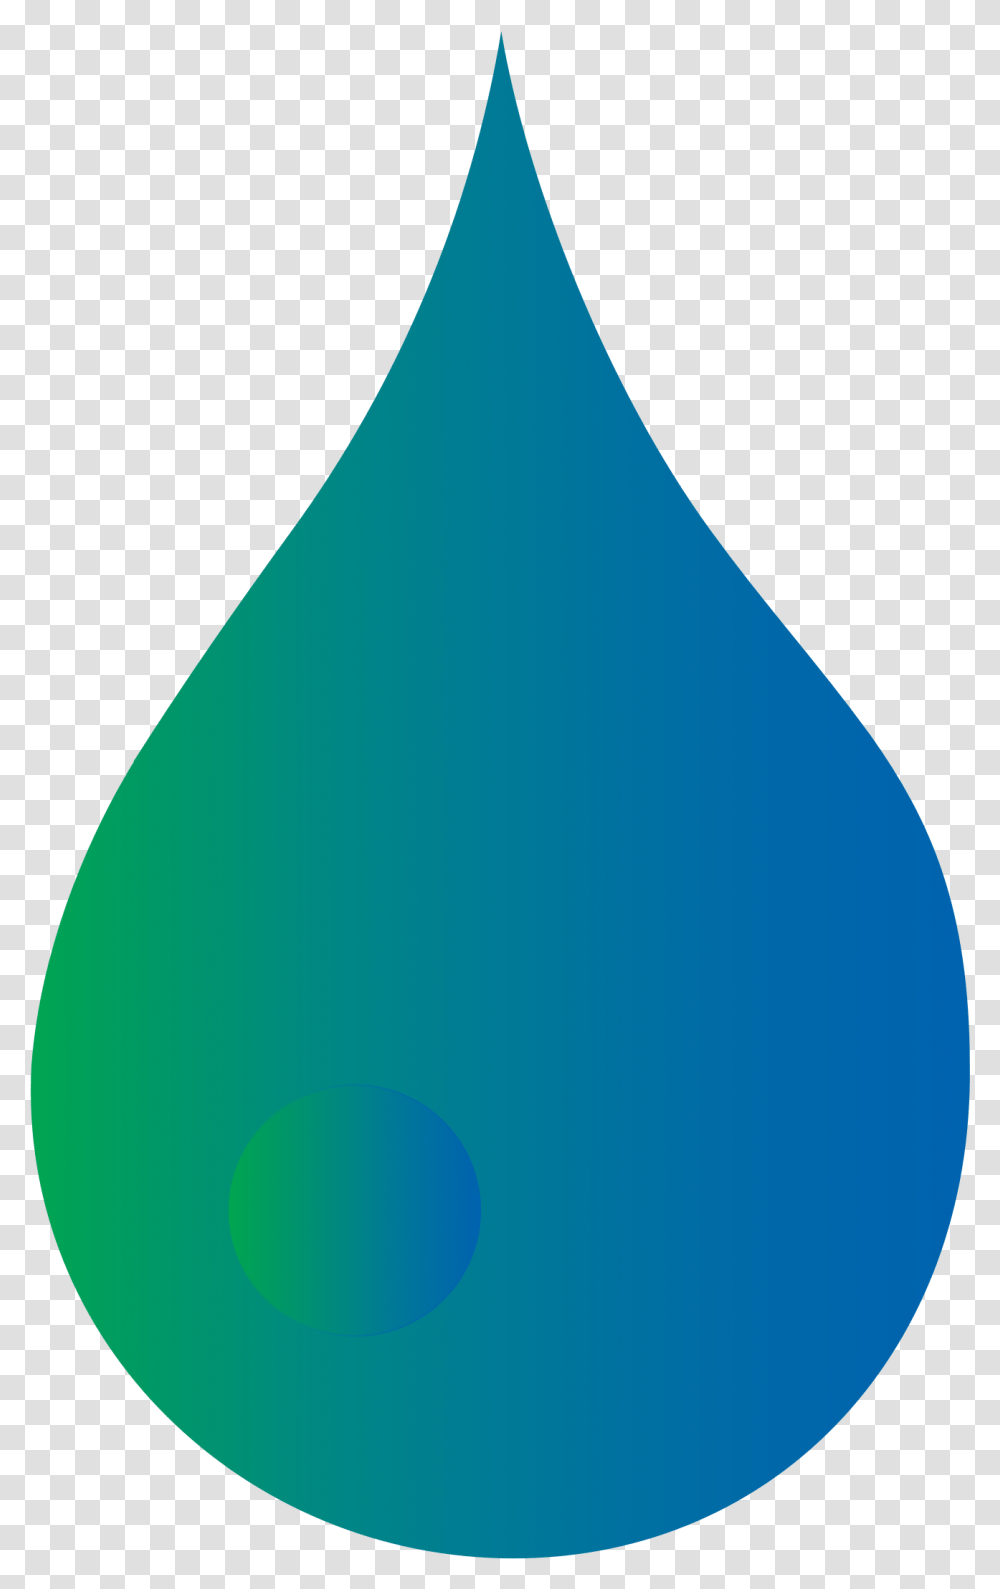 Download Hd Water Drops Tropfen Blau Su Damlas Vektr, Droplet, Plant, Balloon Transparent Png